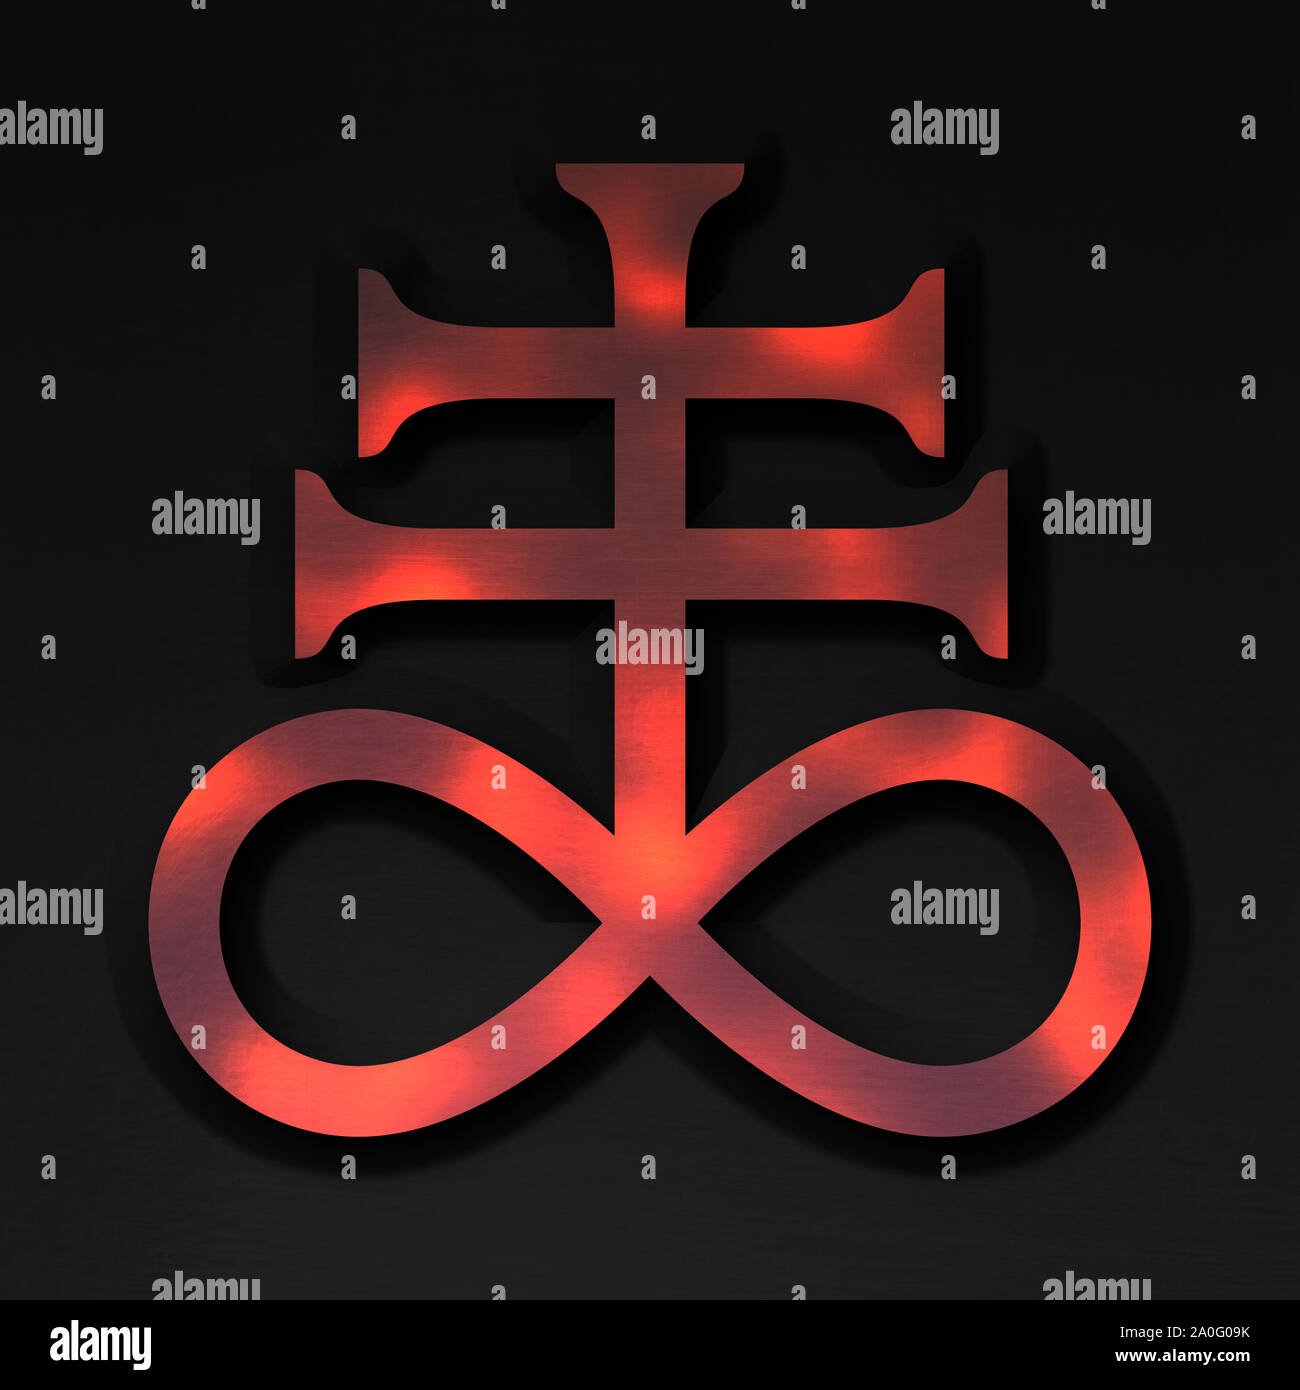 Alchemy Symbol - Sulfur Stock Photo